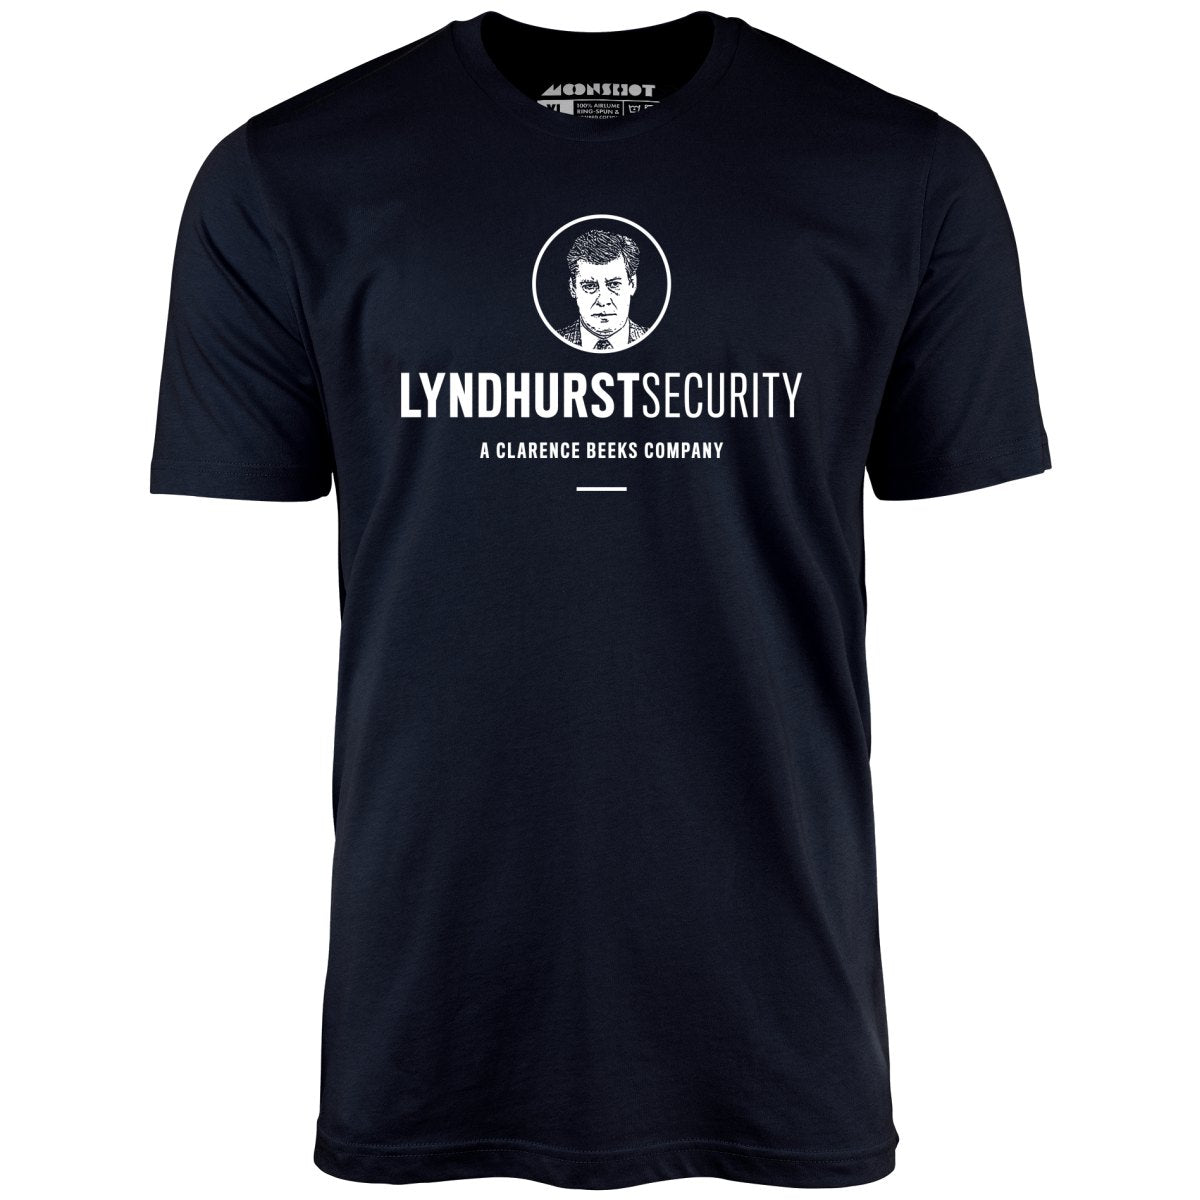 Lyndhurst Security - Clarence Beeks - Unisex T-Shirt